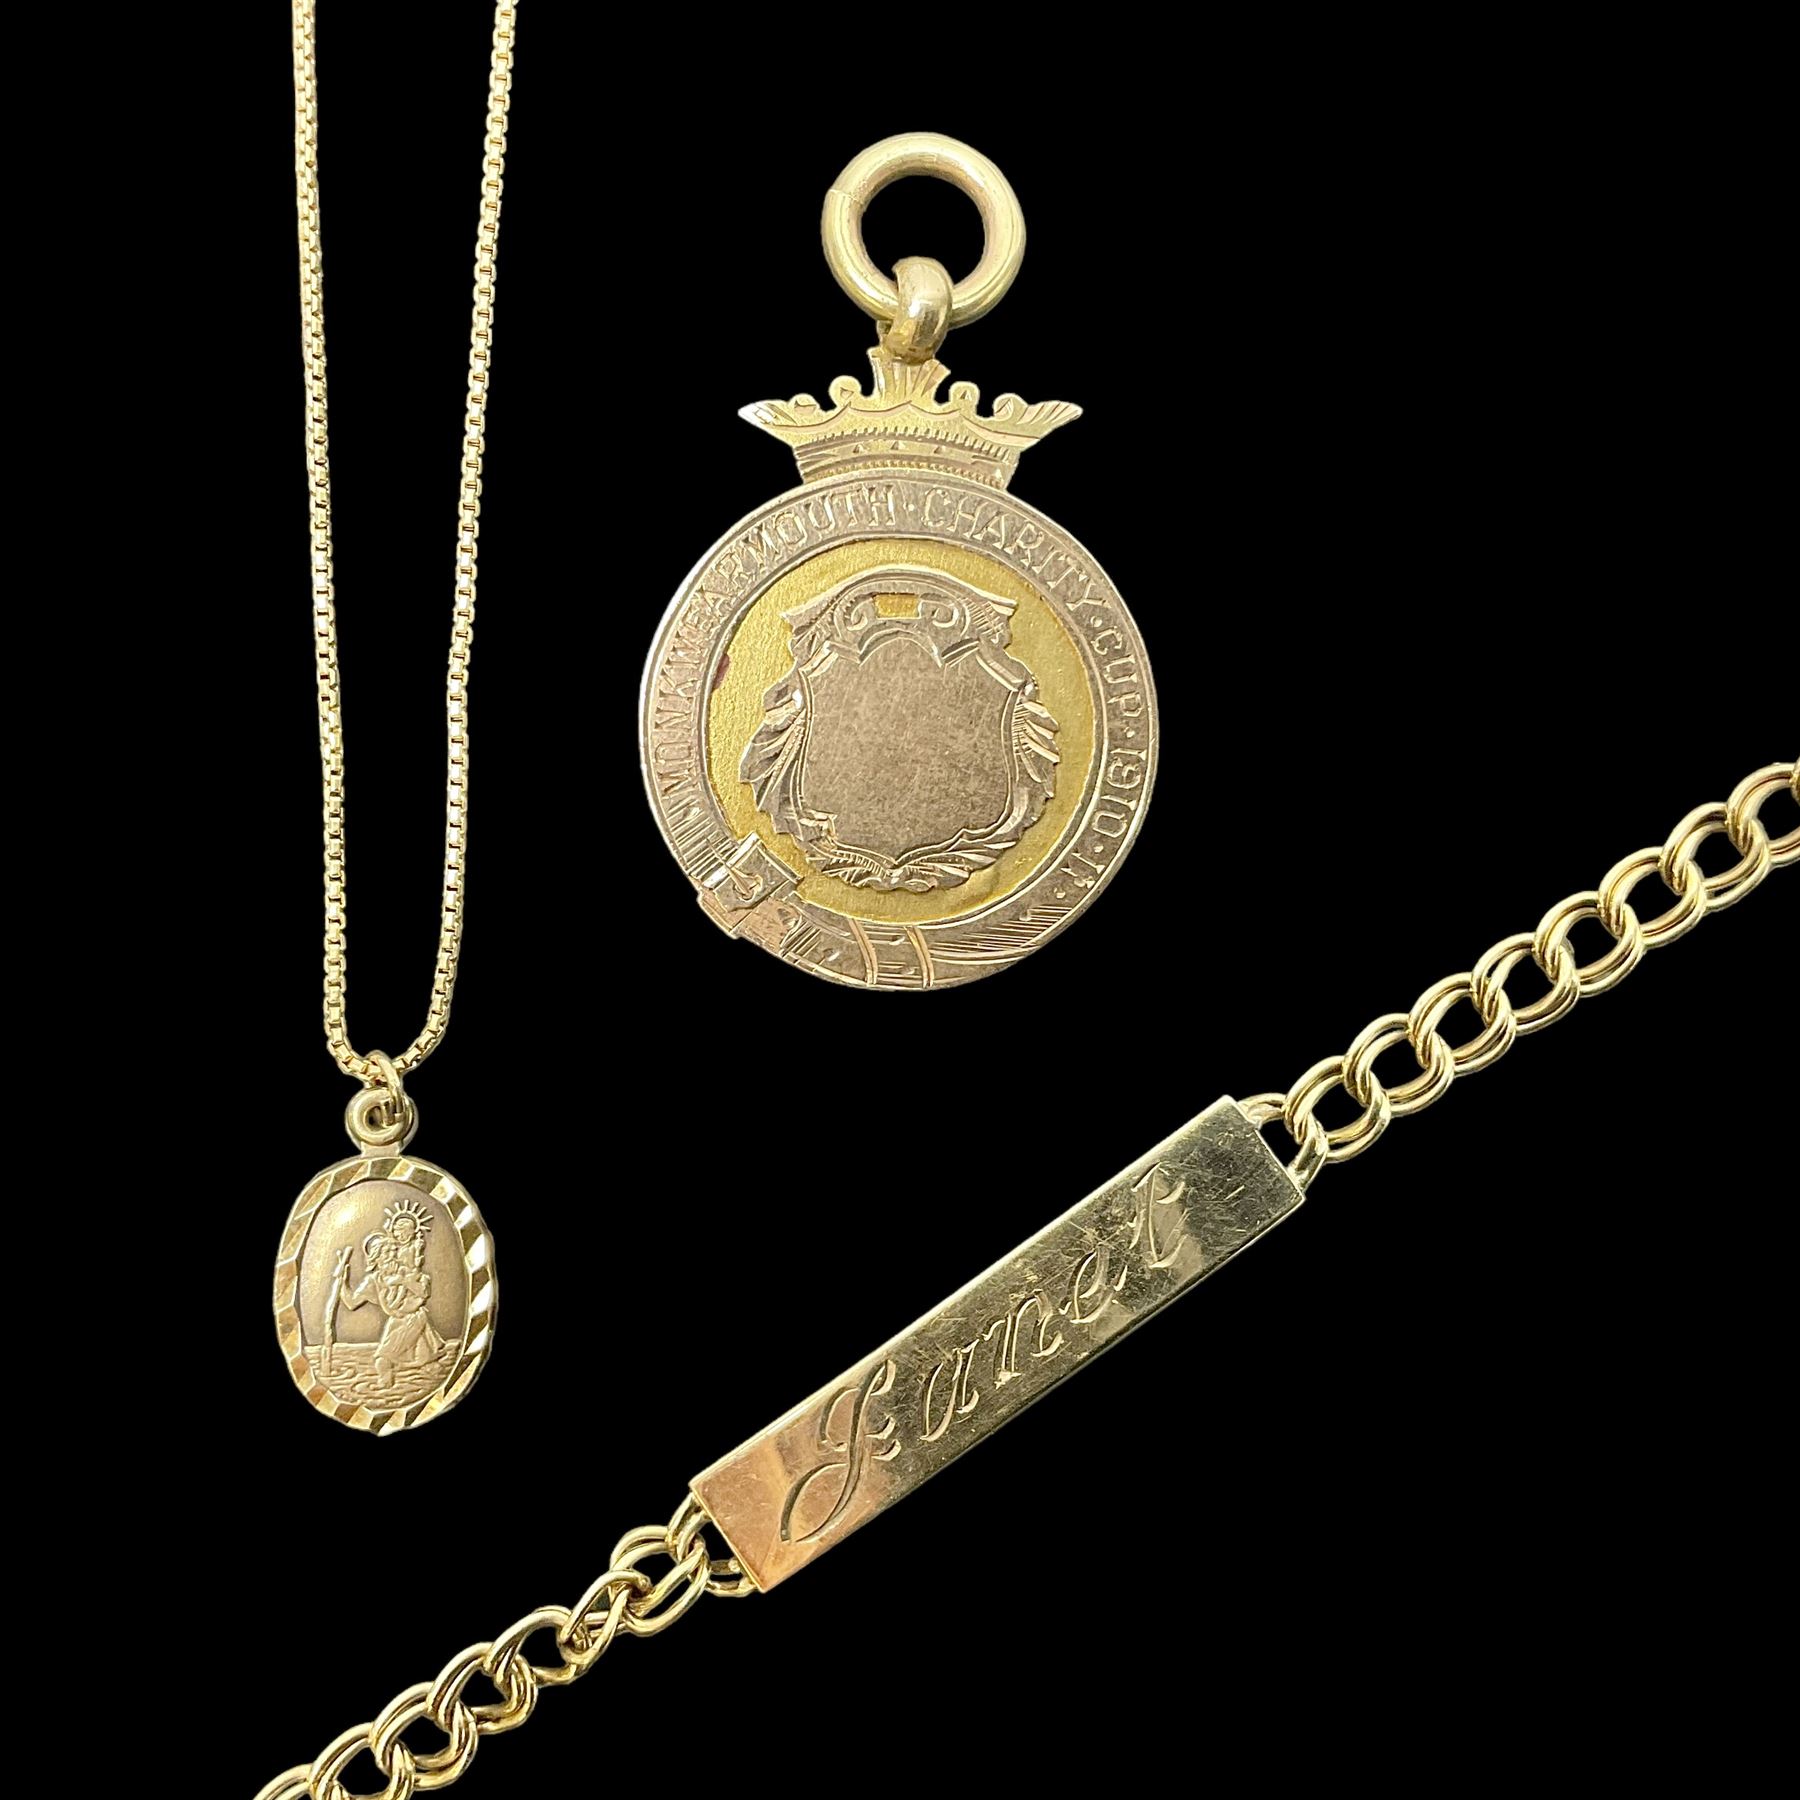 9ct gold jewellery including identity bracelet